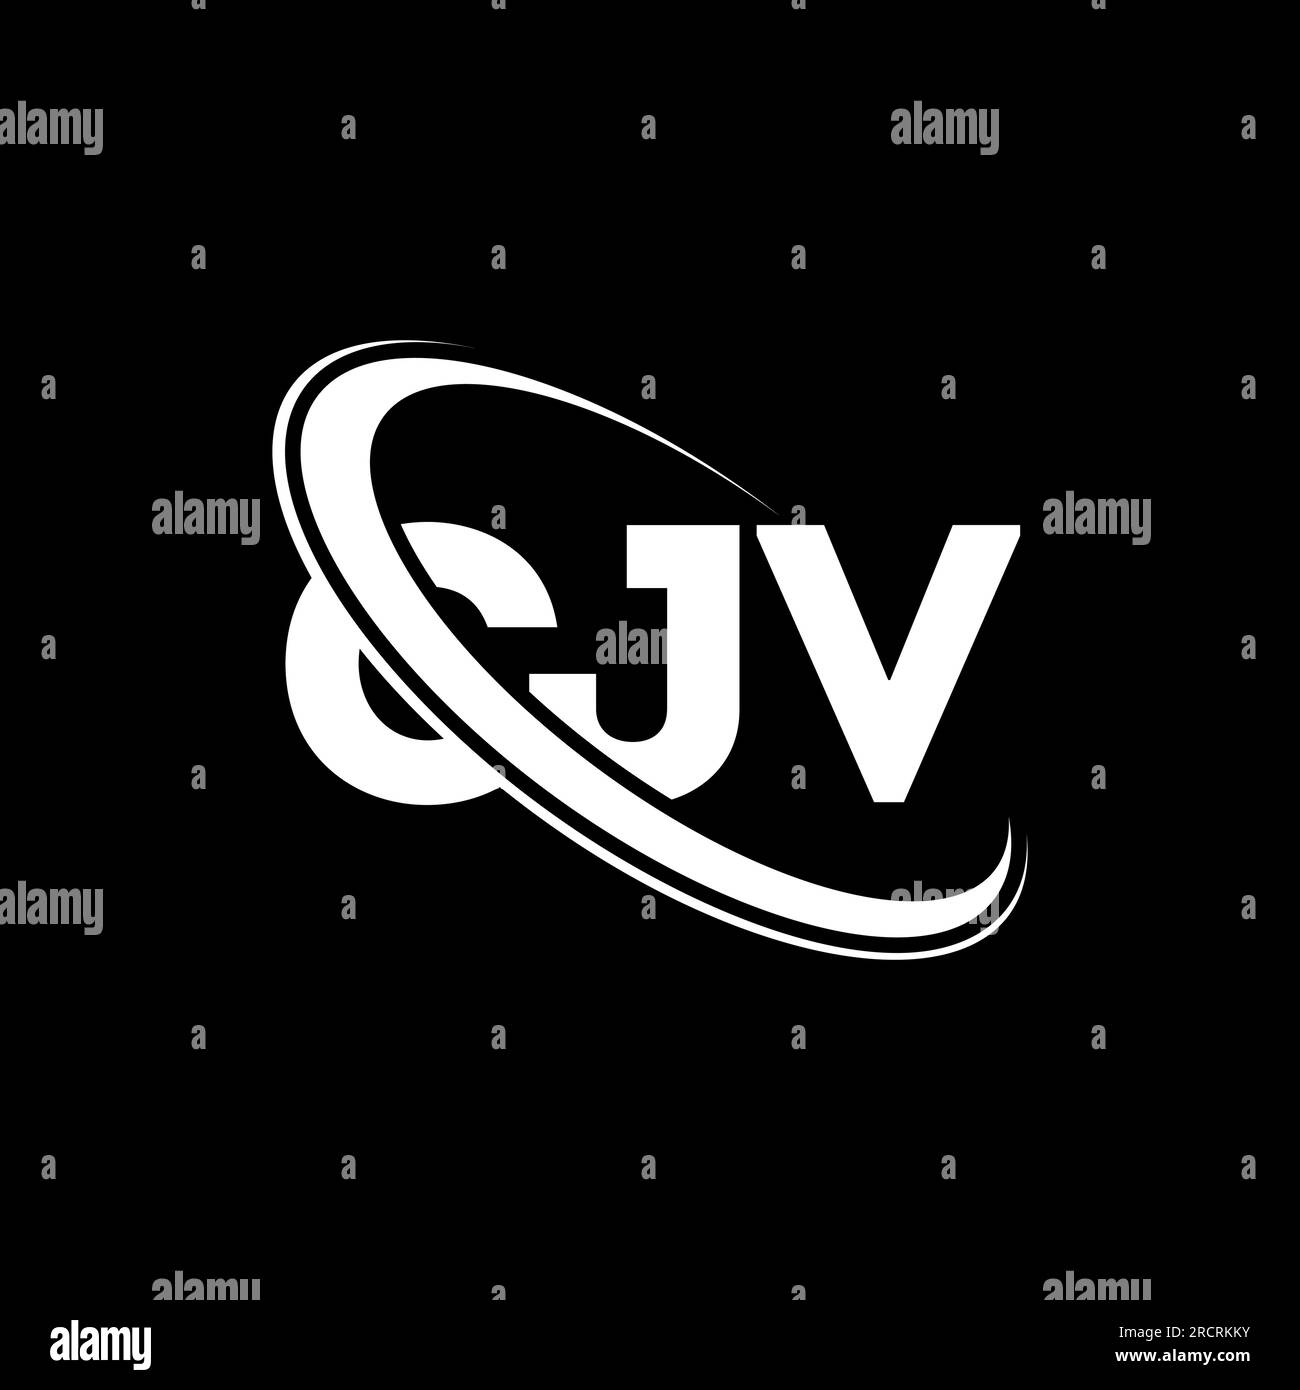 CJV logo. CJV letter. CJV letter logo design. Initials CJV logo linked with circle and uppercase monogram logo. CJV typography for technology, busines Stock Vector